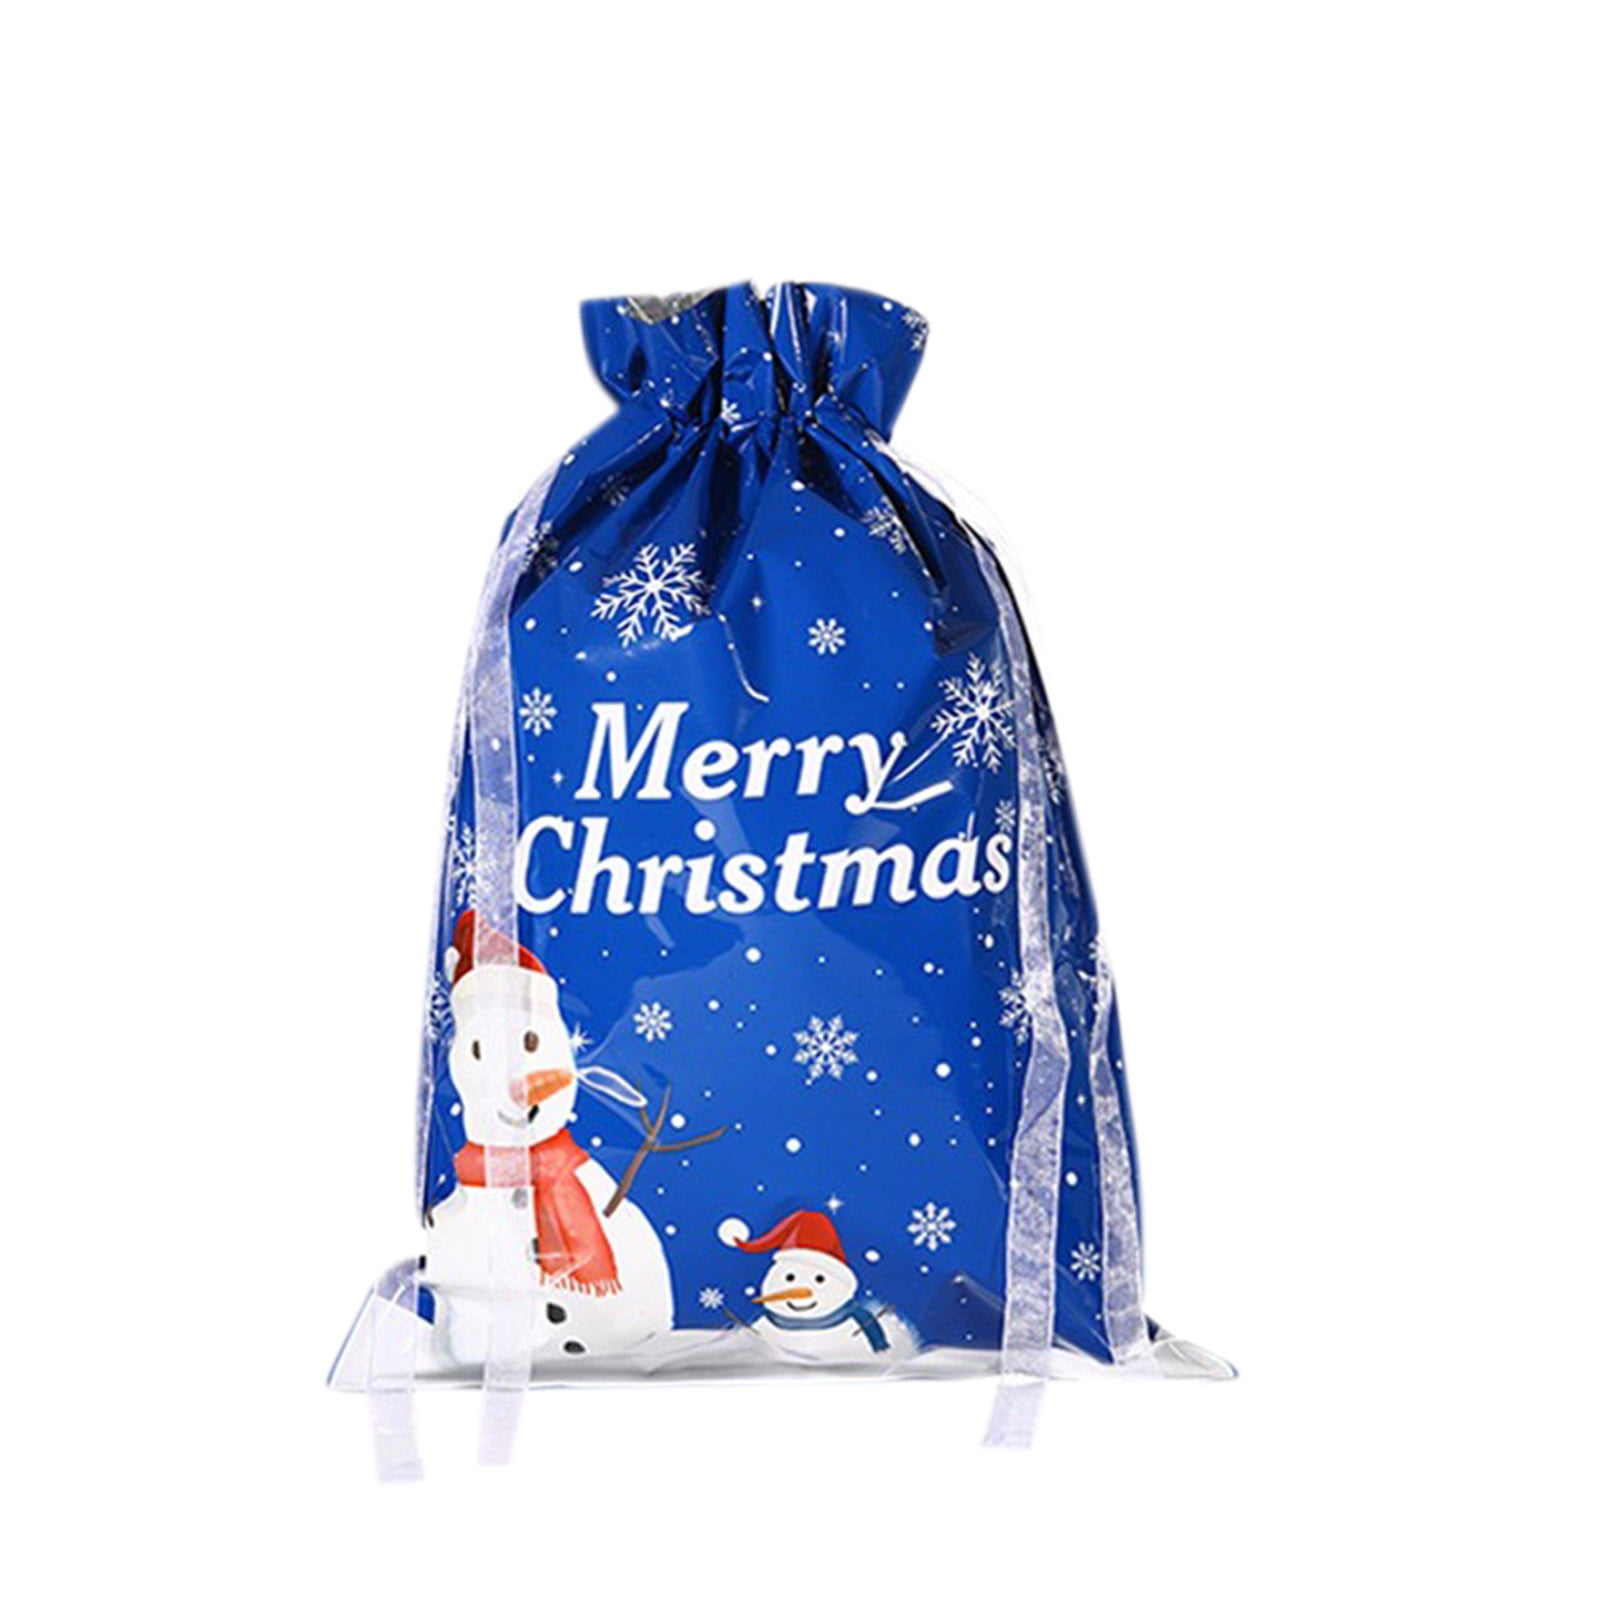 Details about   Giant Xmas Santa Sack Christmas Santa Claus Snowmen Candy Present Packaging Bag 